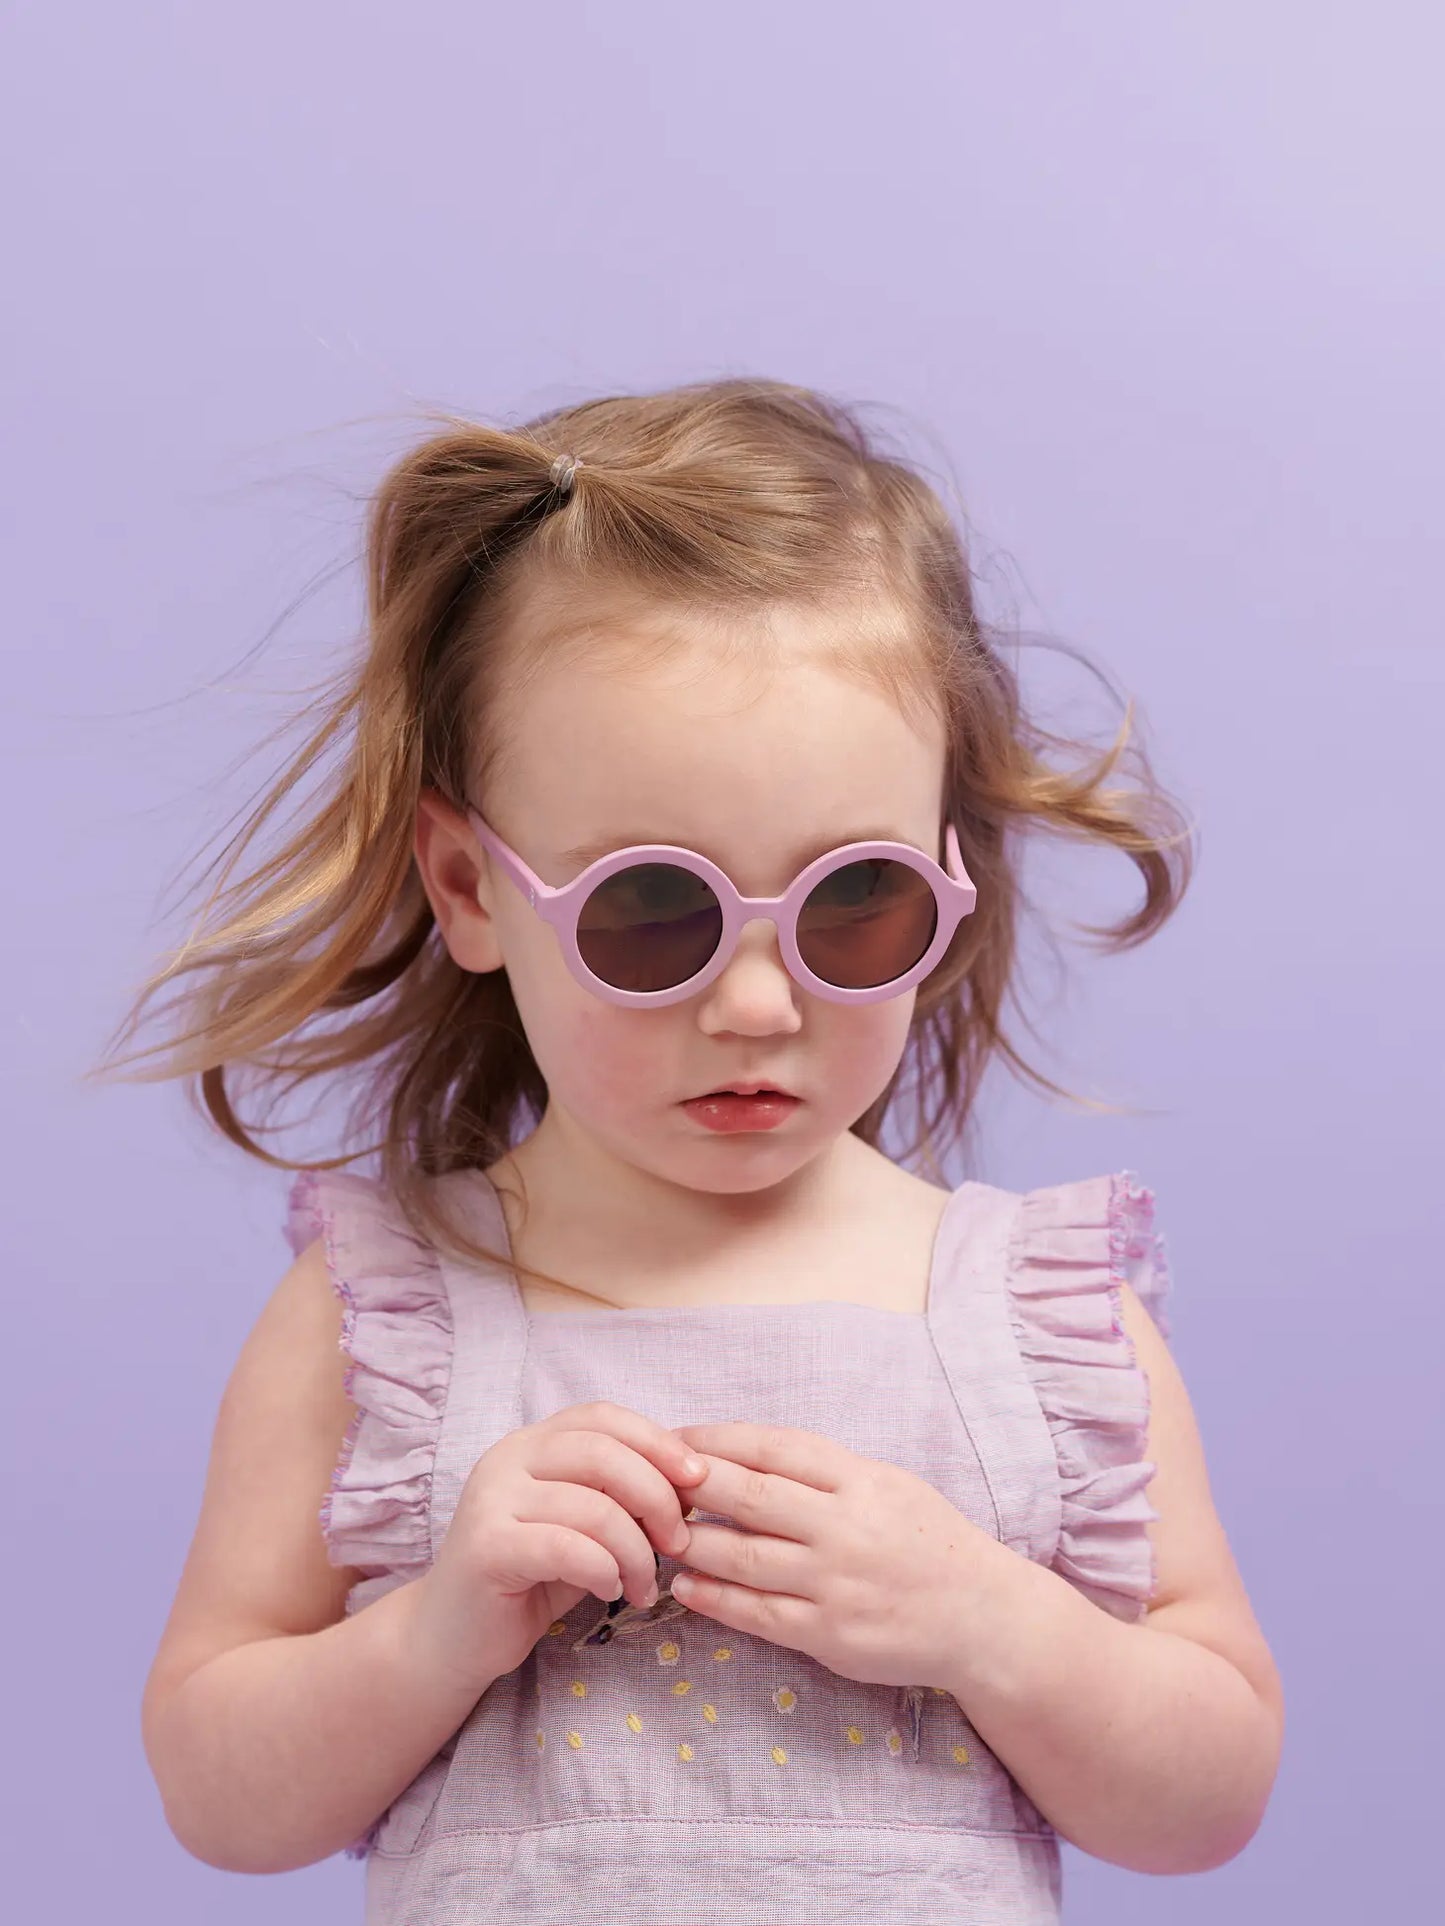 Babiators® Euro Round Playfully Plum Sunglasses with Amber lens